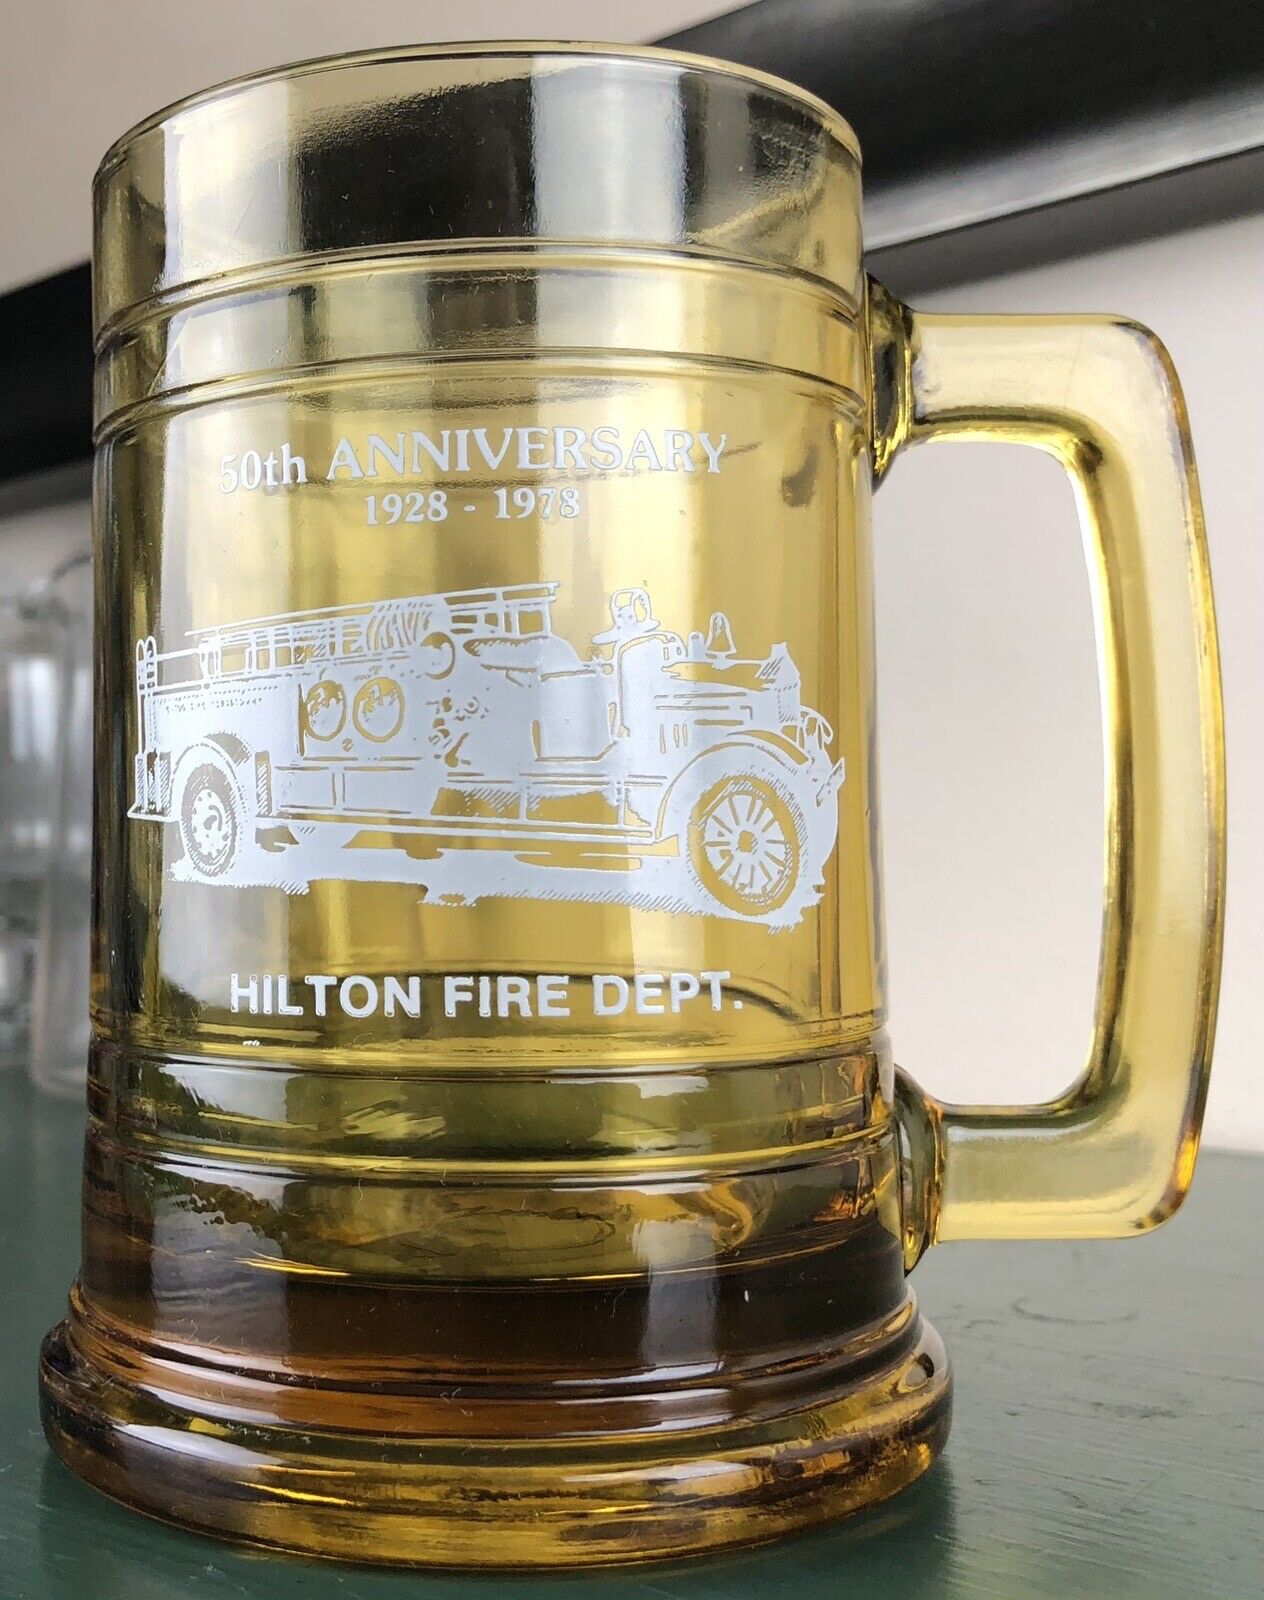 Hilton Fire Department 50th Anniversary 1928-1978 Amber Glass 15oz Beer Tankard